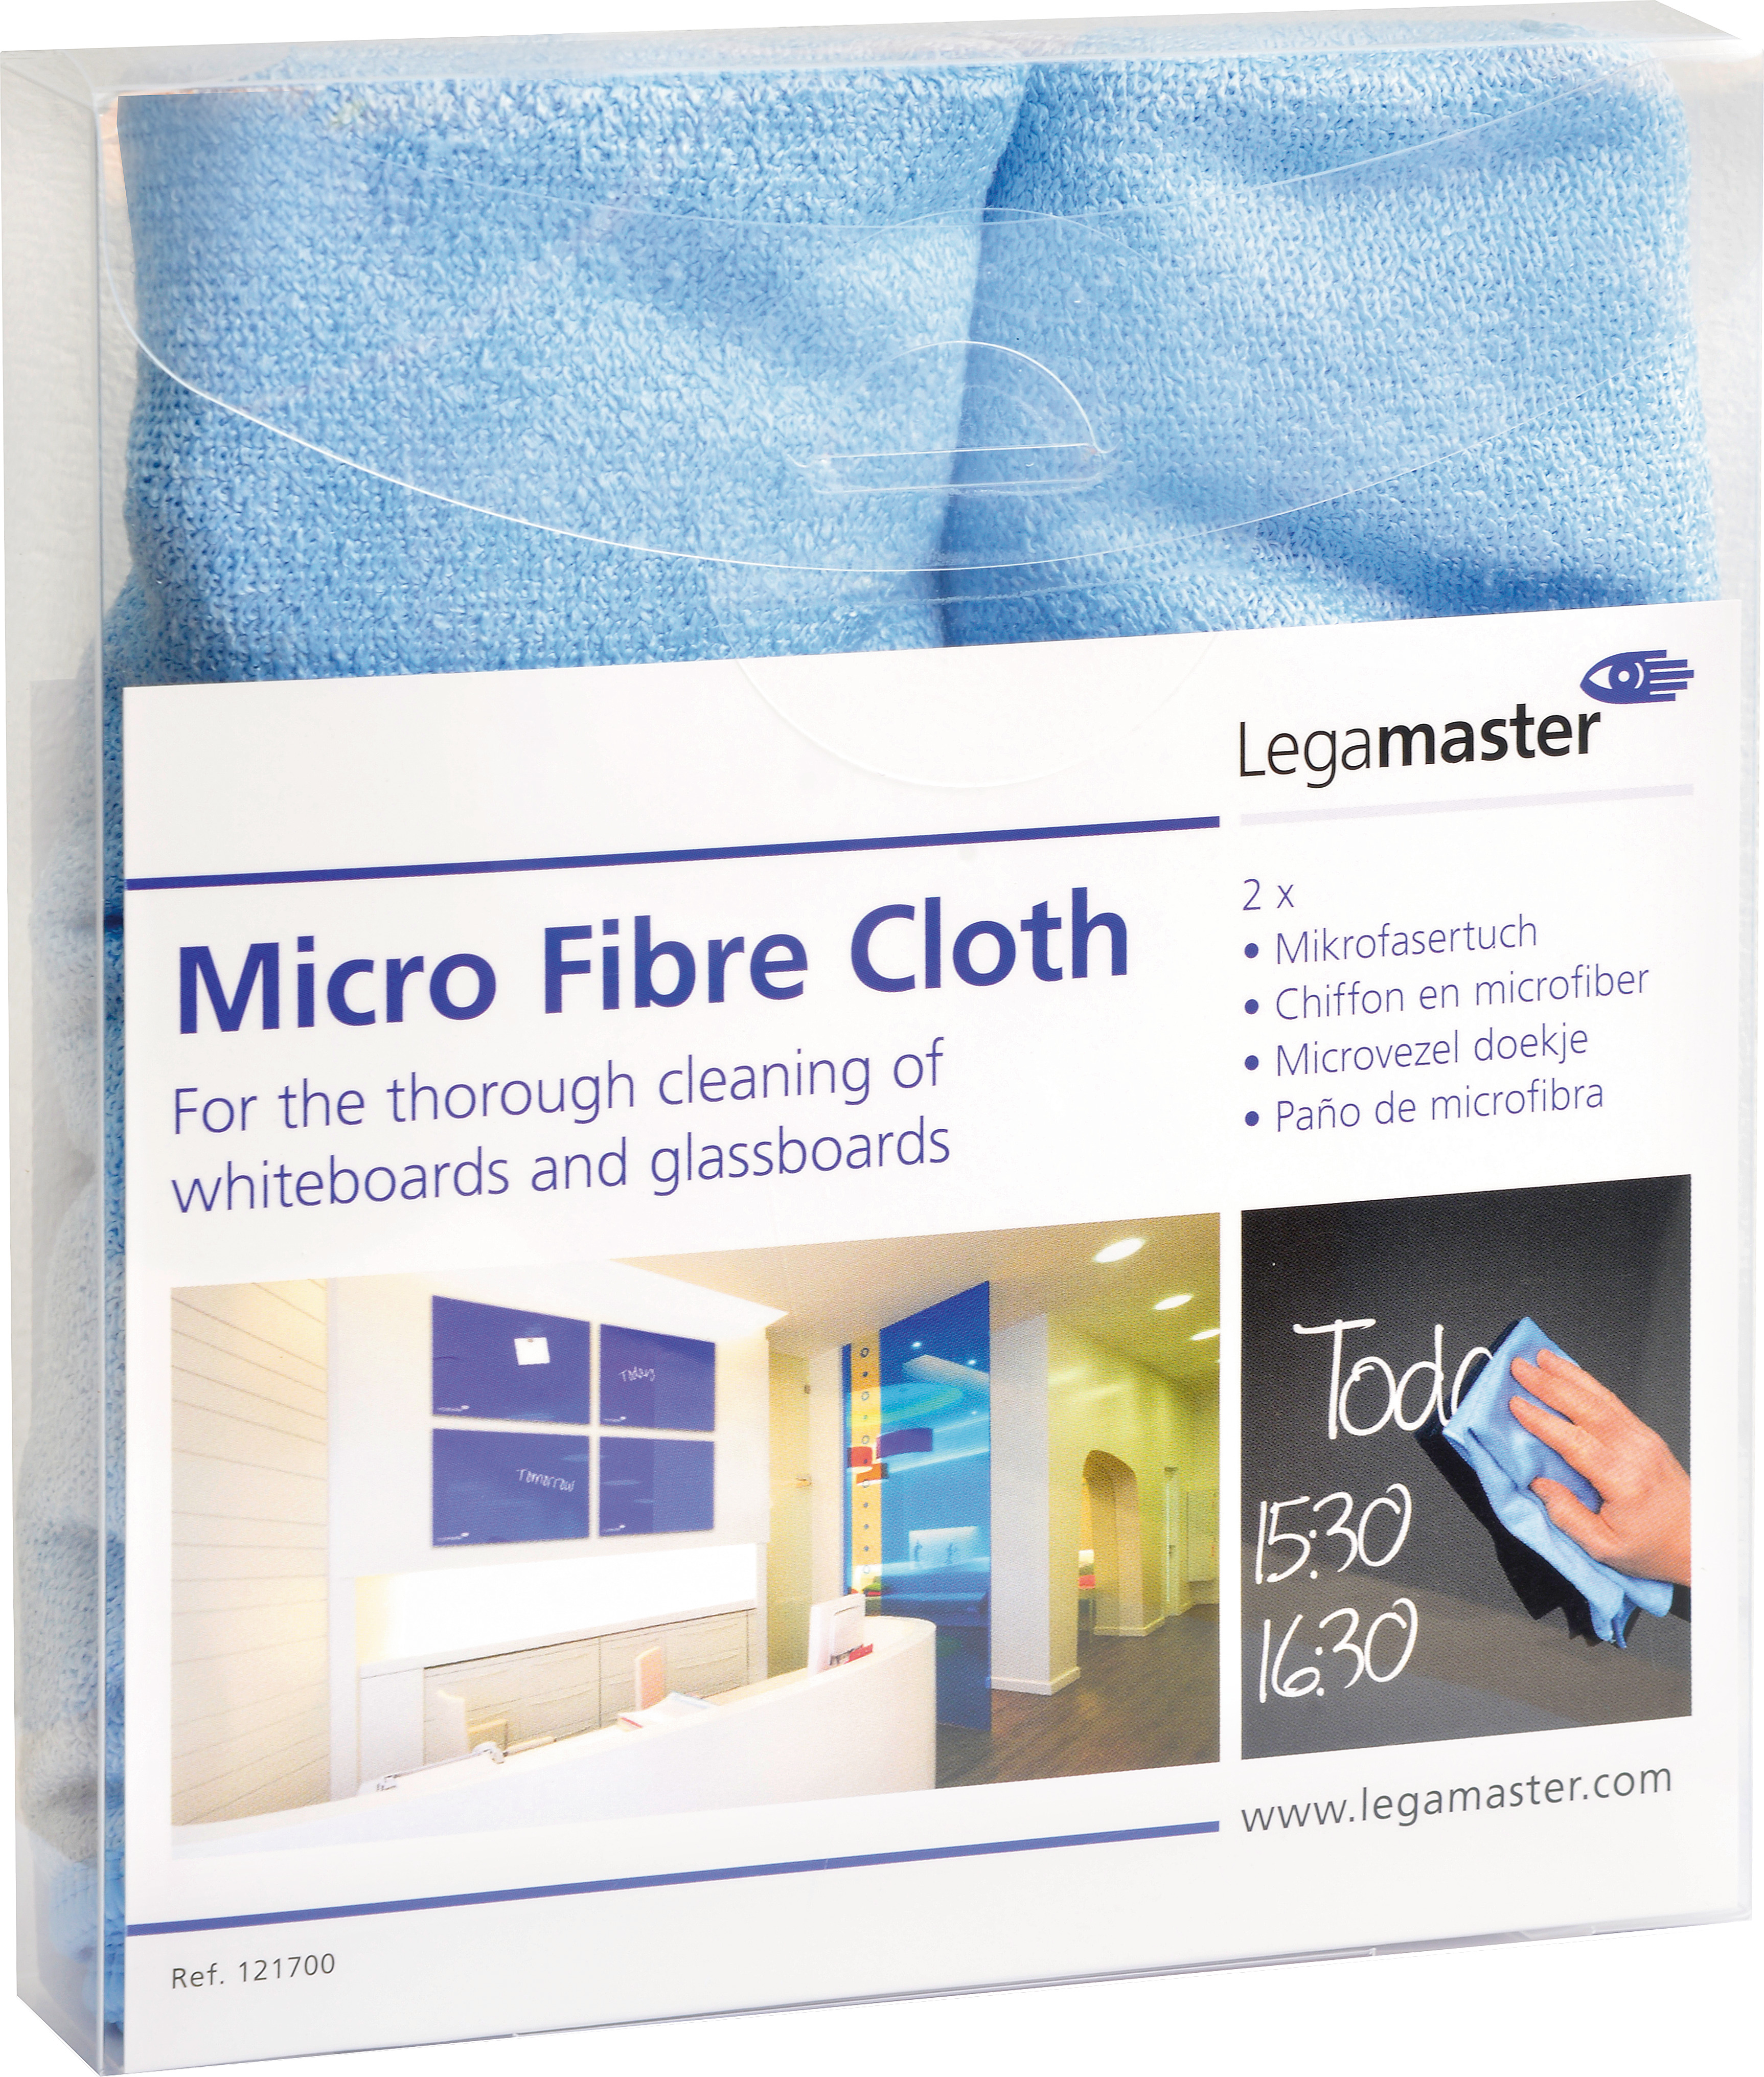 LEGAMASTER Micro fibre 40x40cm 7-121700 bleu textile 2 pcs.